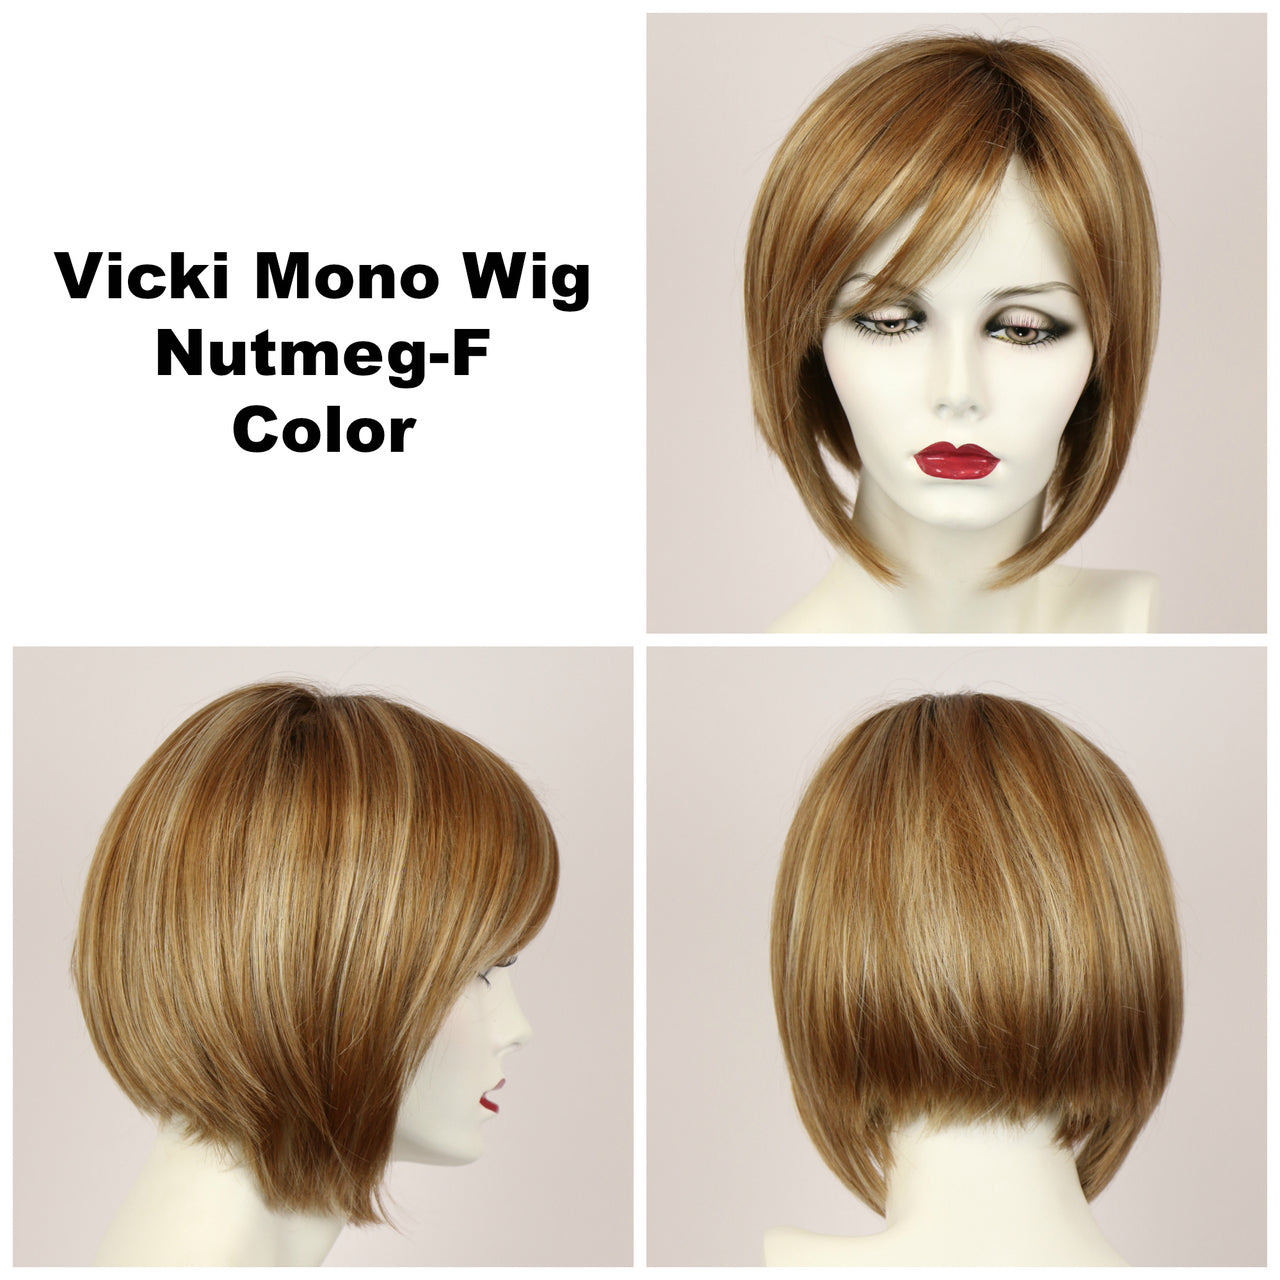 Nutmeg-F / Vicki Monofilament w/ Roots / Medium Wig